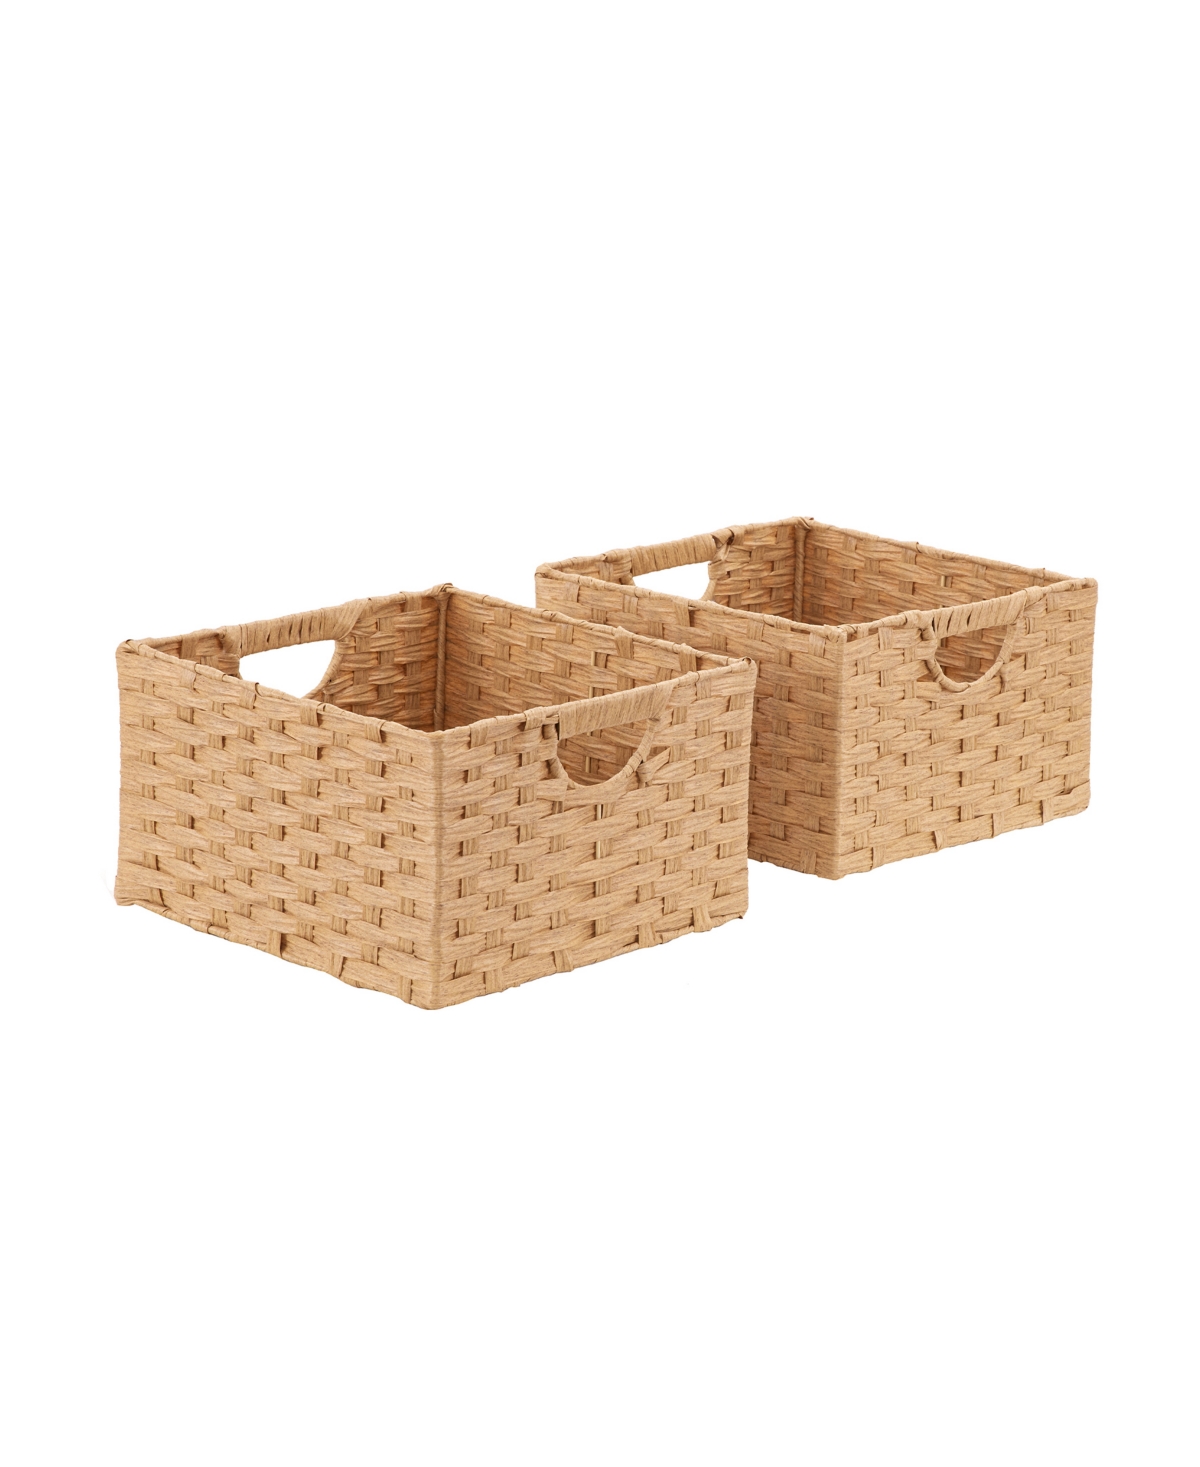 Foldable Handwoven Cube Storage Baskets, Set of 2 - Mocha Brown